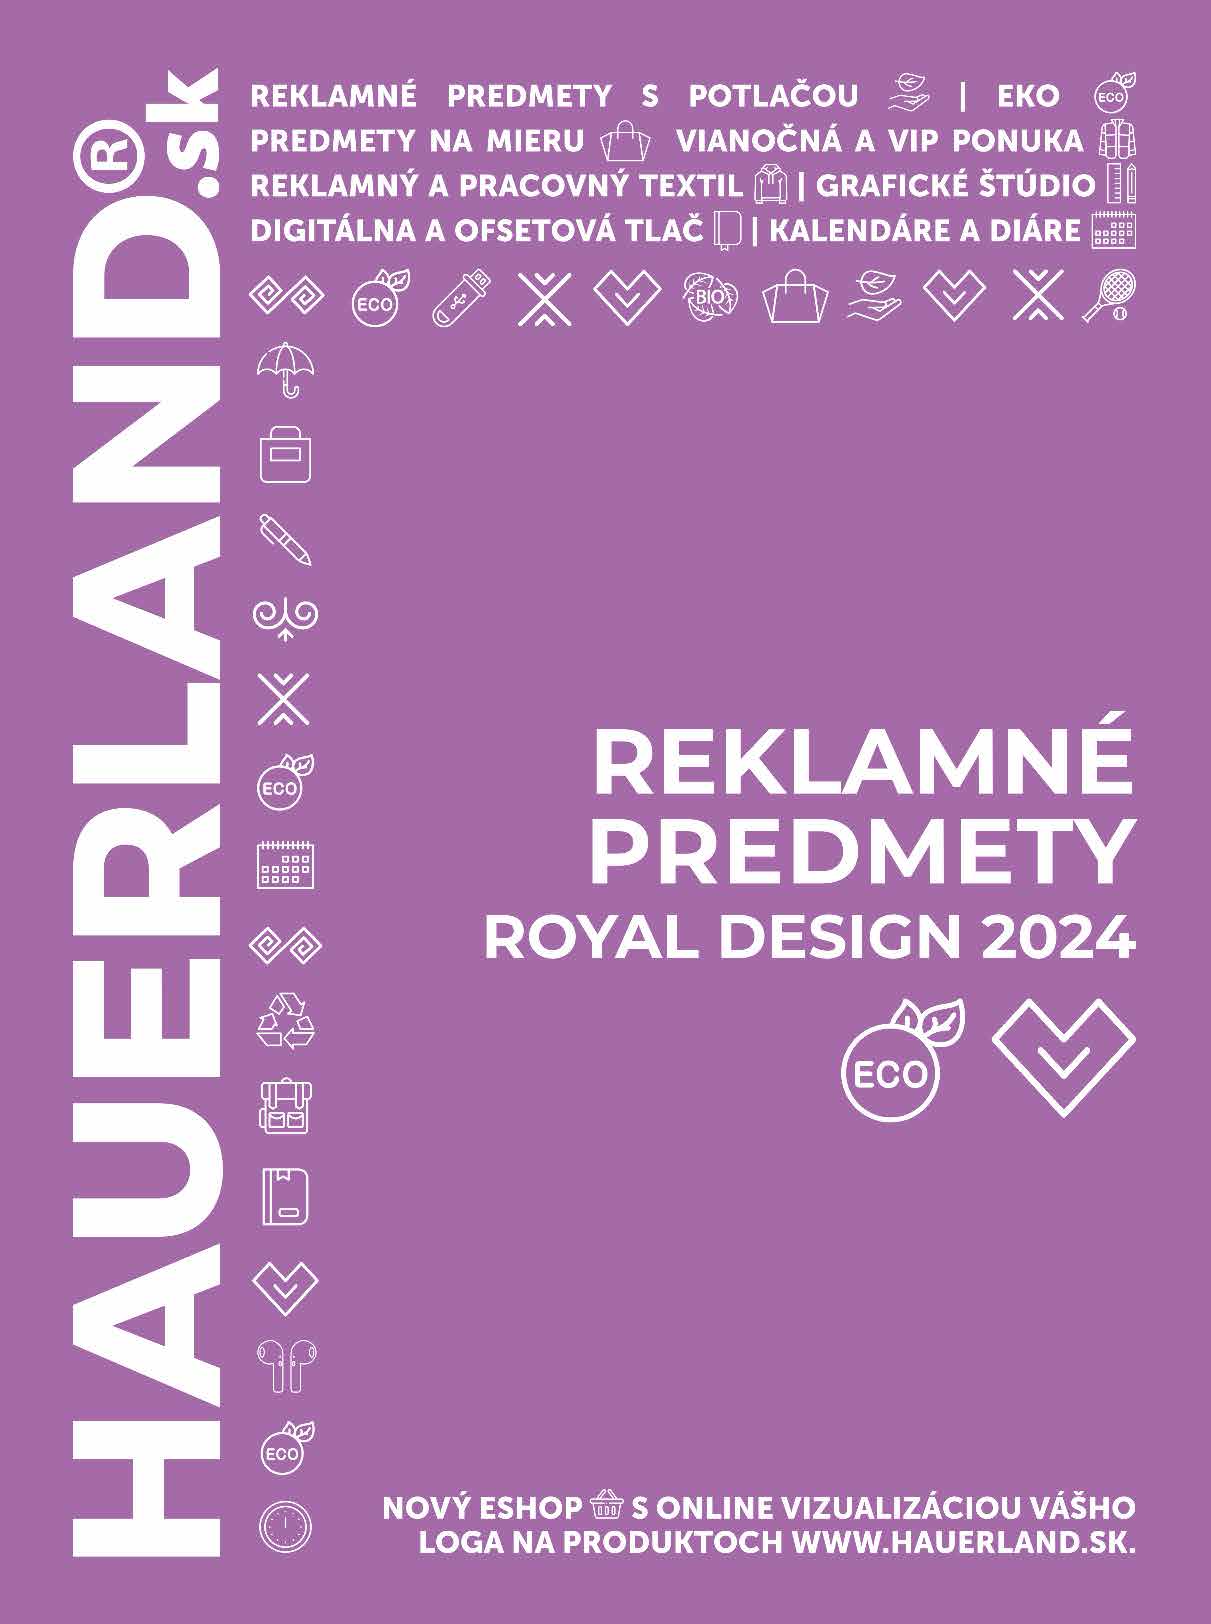 Royal Design 2024